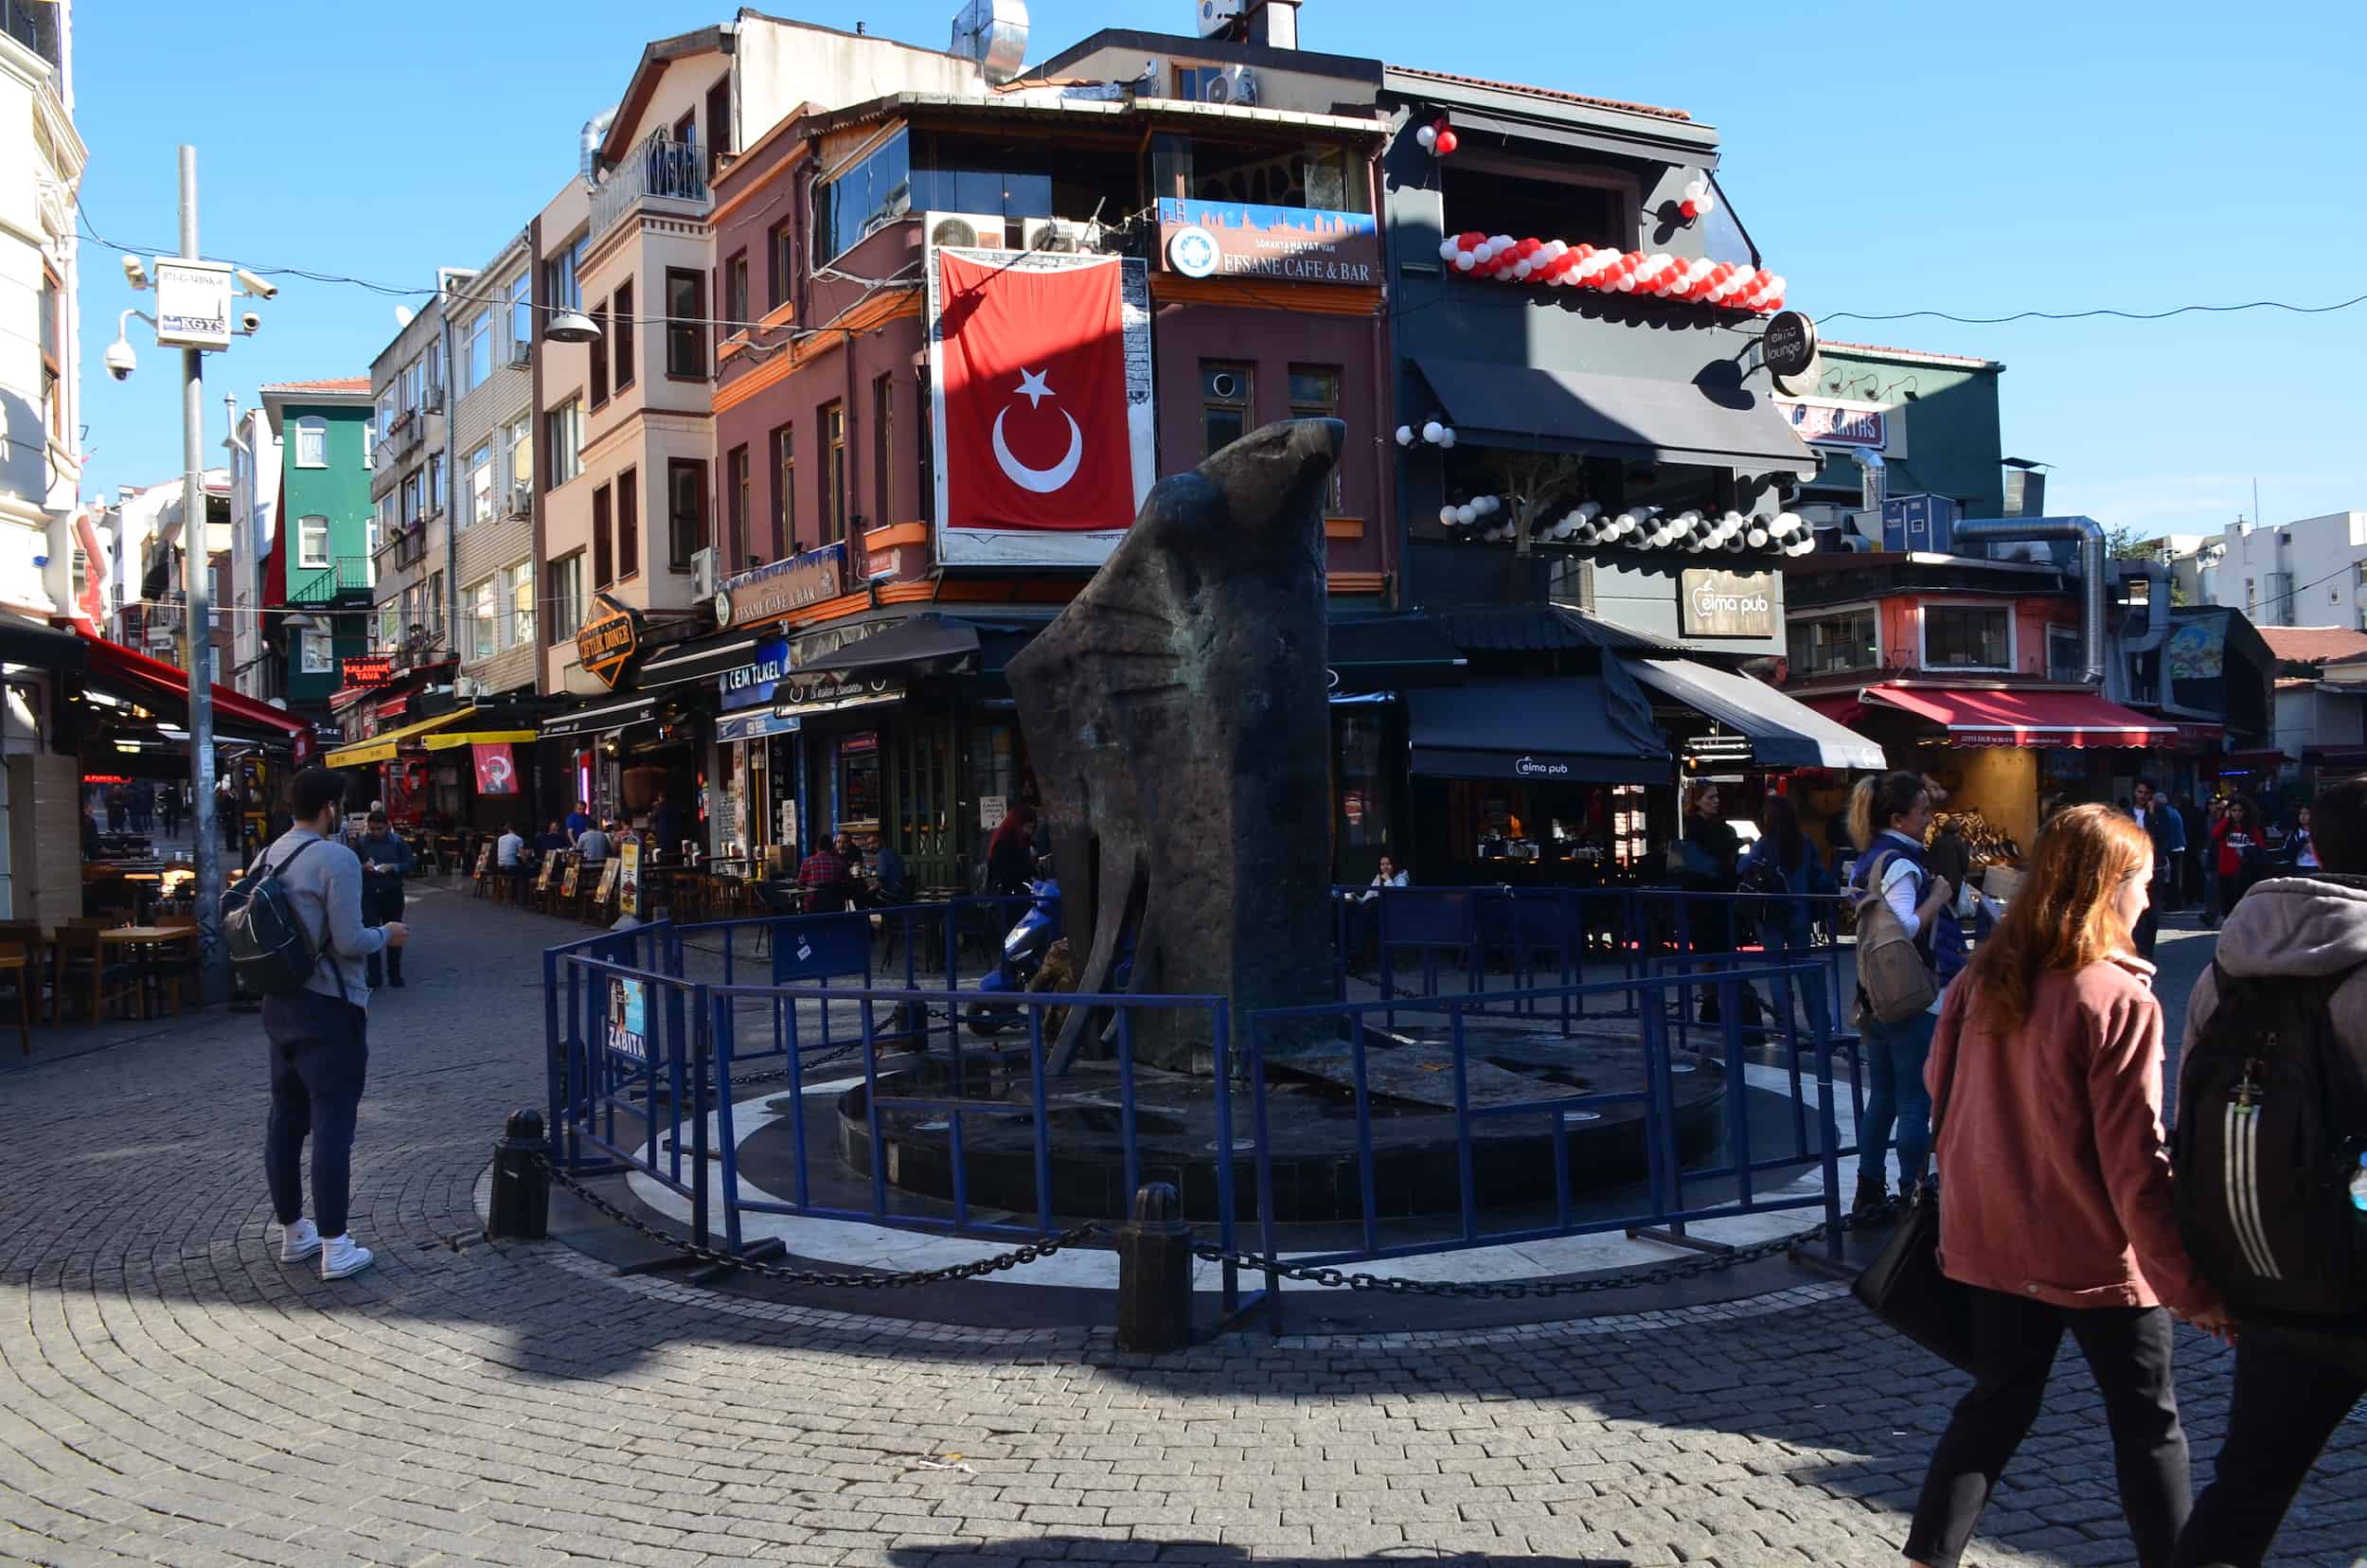 Black eagle sculpture in Çarşı, Beşiktaş, Istanbul, Turkey